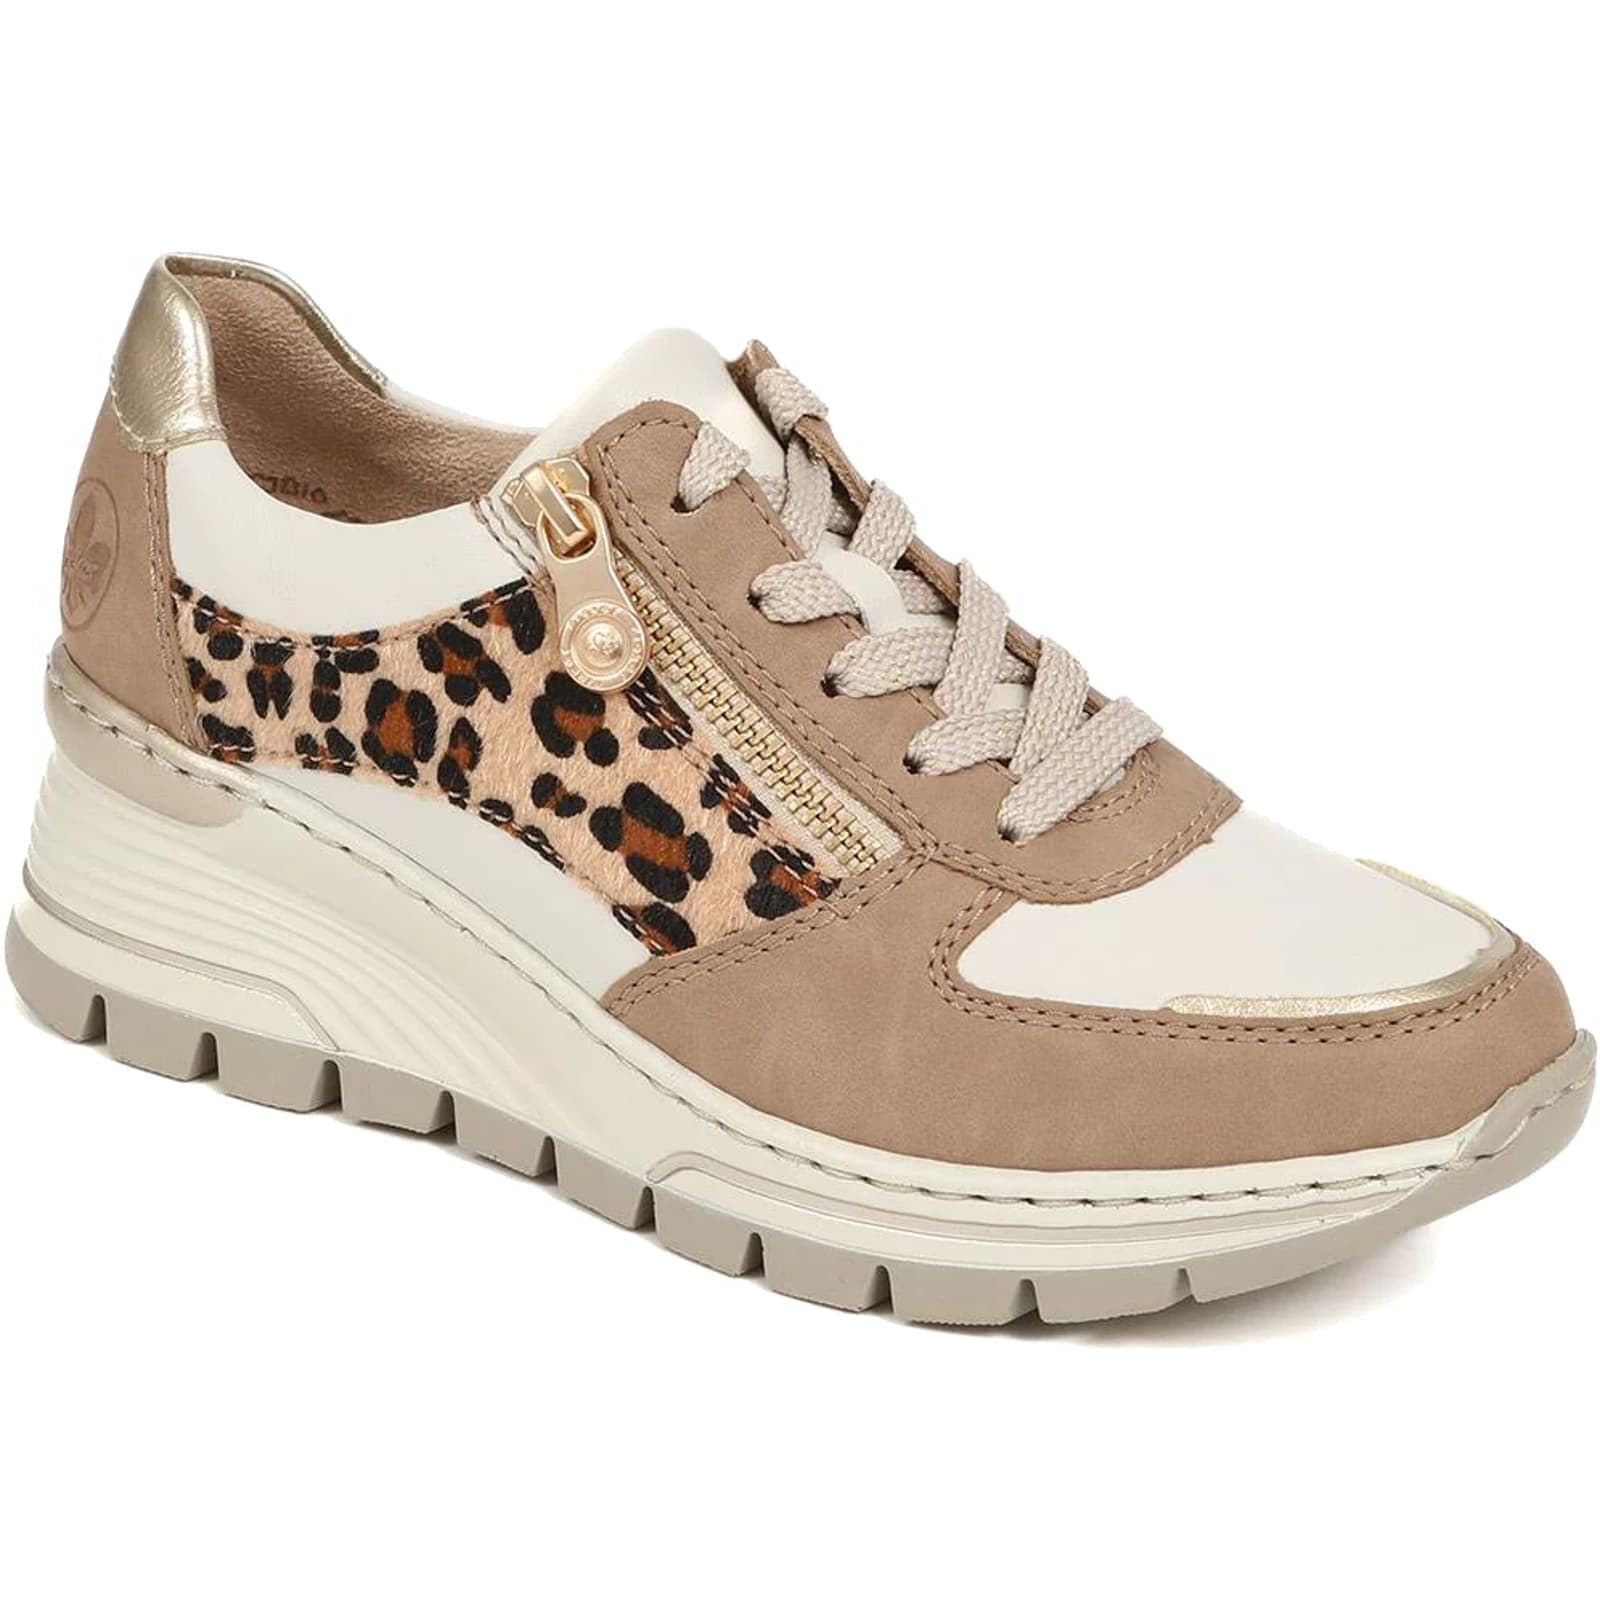 Rieker Women's N8308-64 Leopard Print Zip Trainers Shoes - UK 5 / EU 38